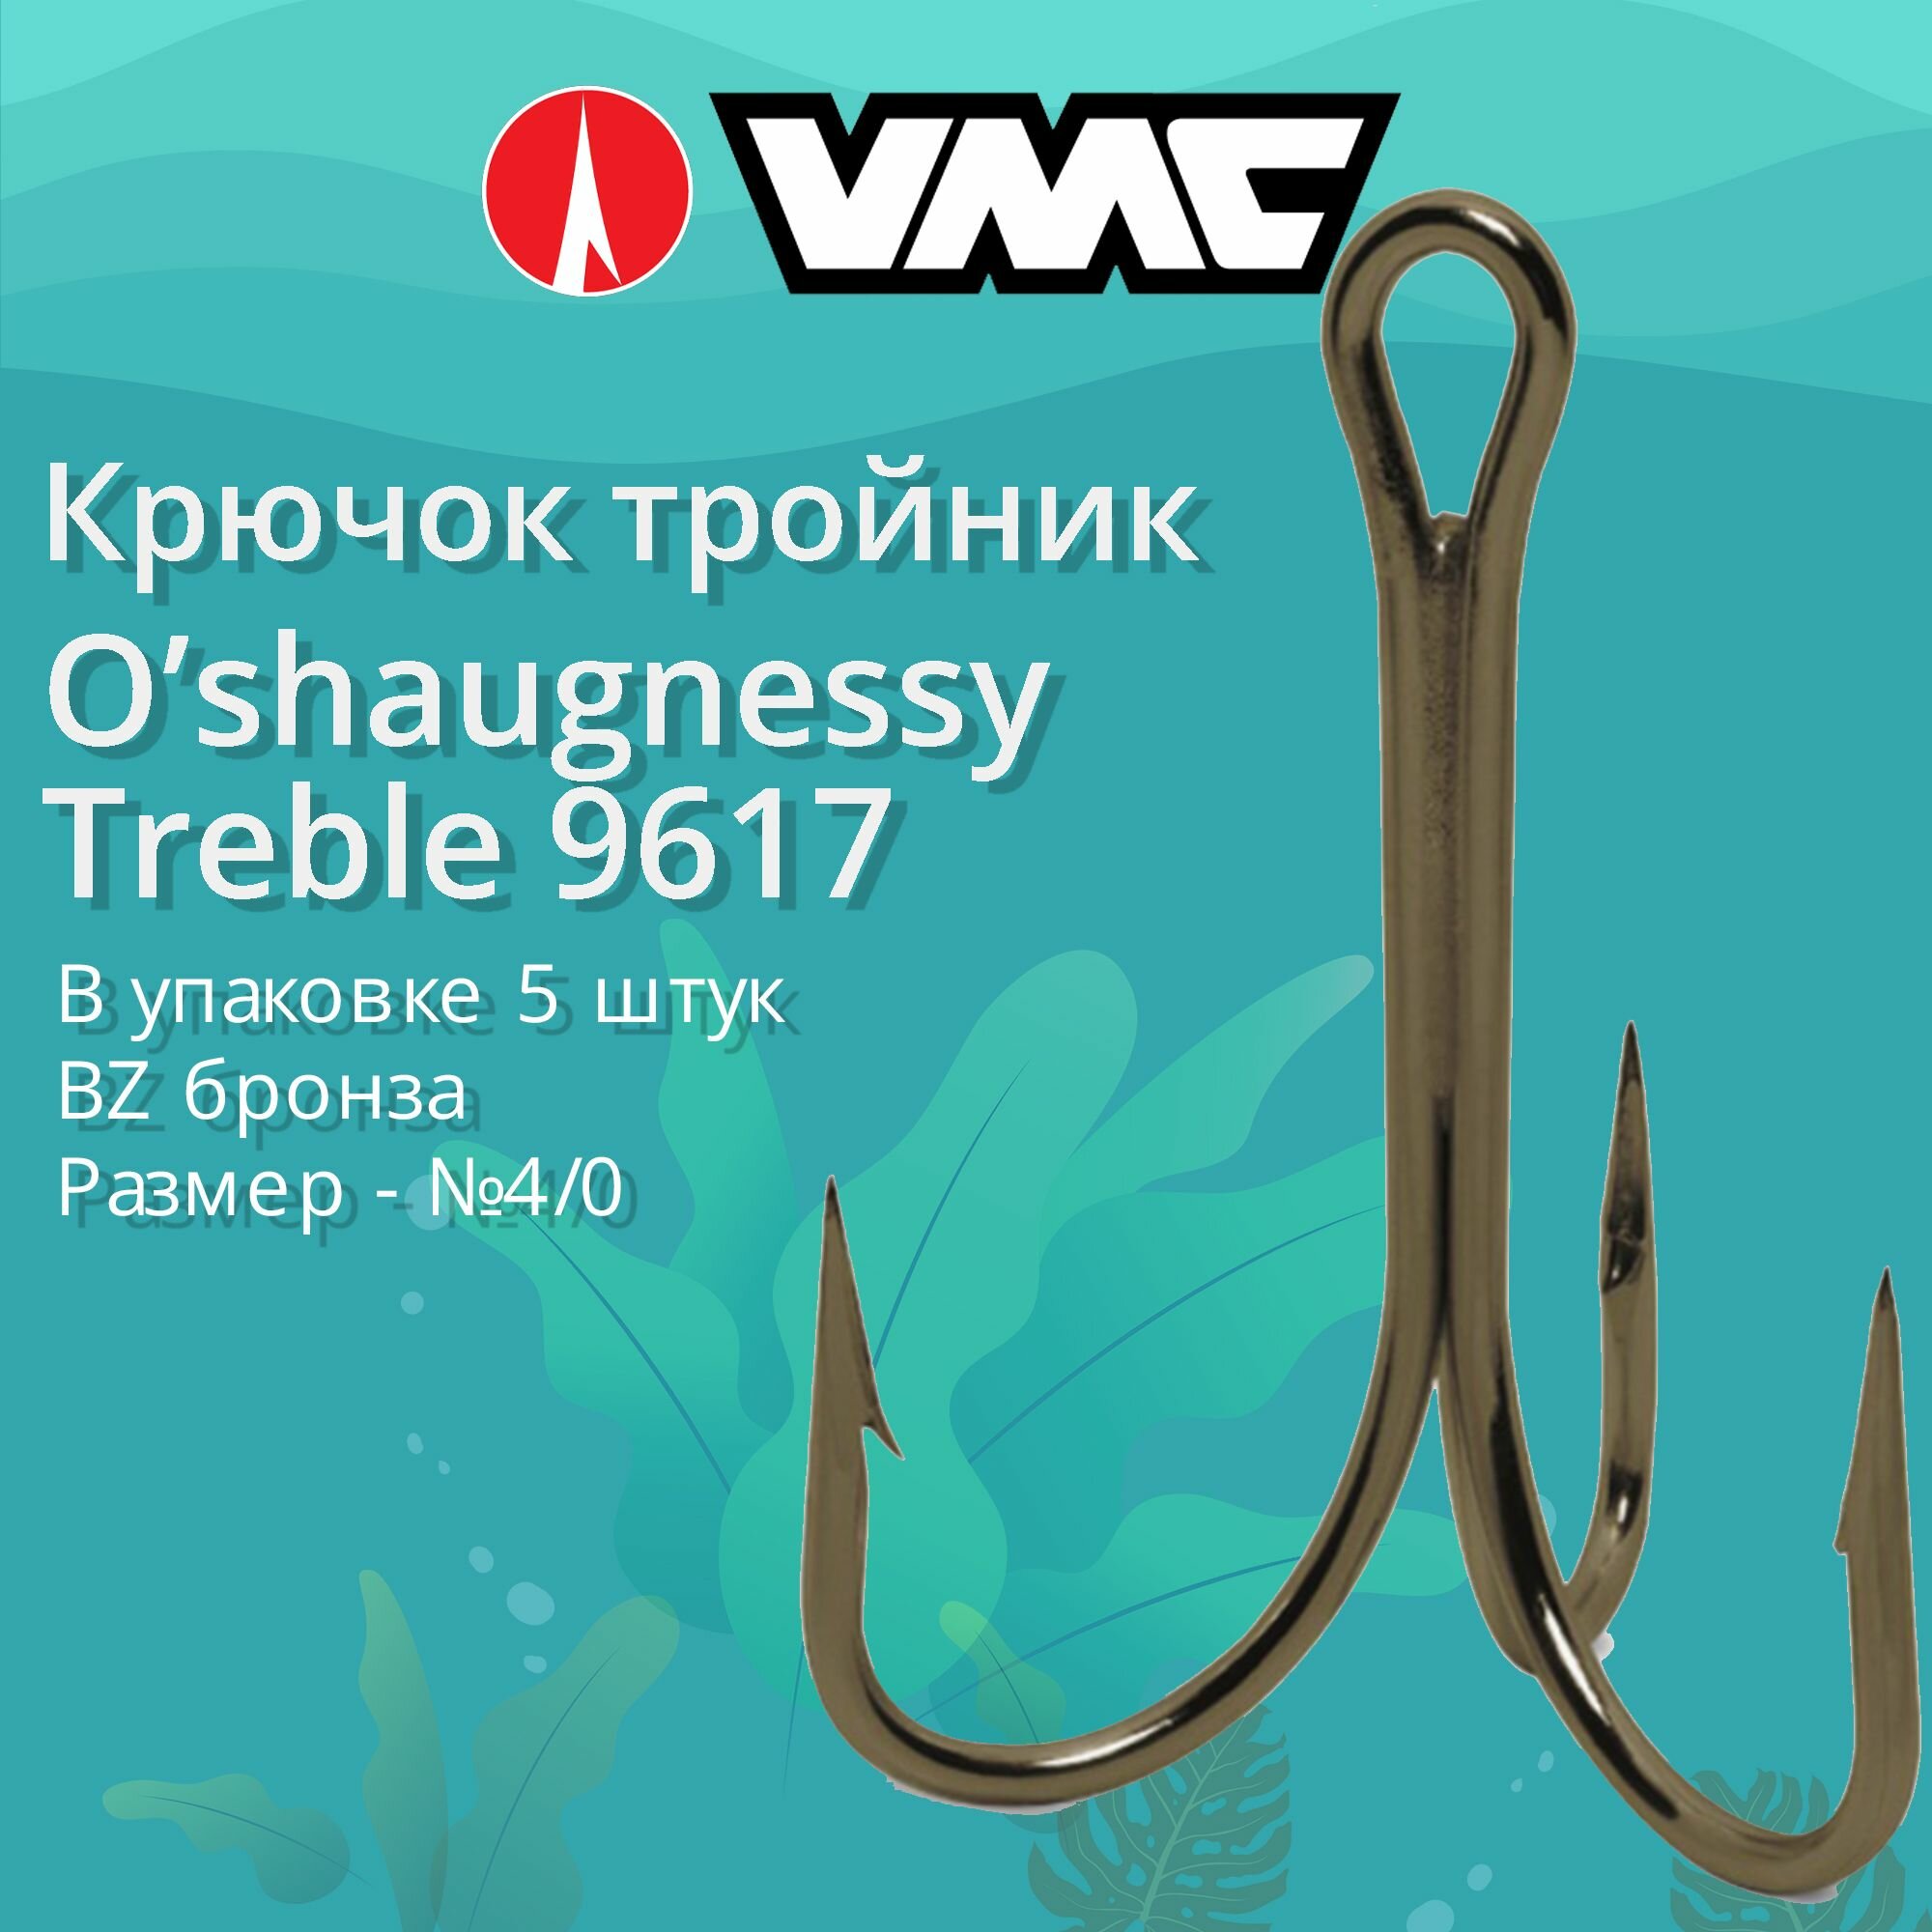 Крючки для рыбалки (тройник) VMC O"shaugnessy Treble 9617 BZ (бронза) №4/0 (упаковка 5 штук)